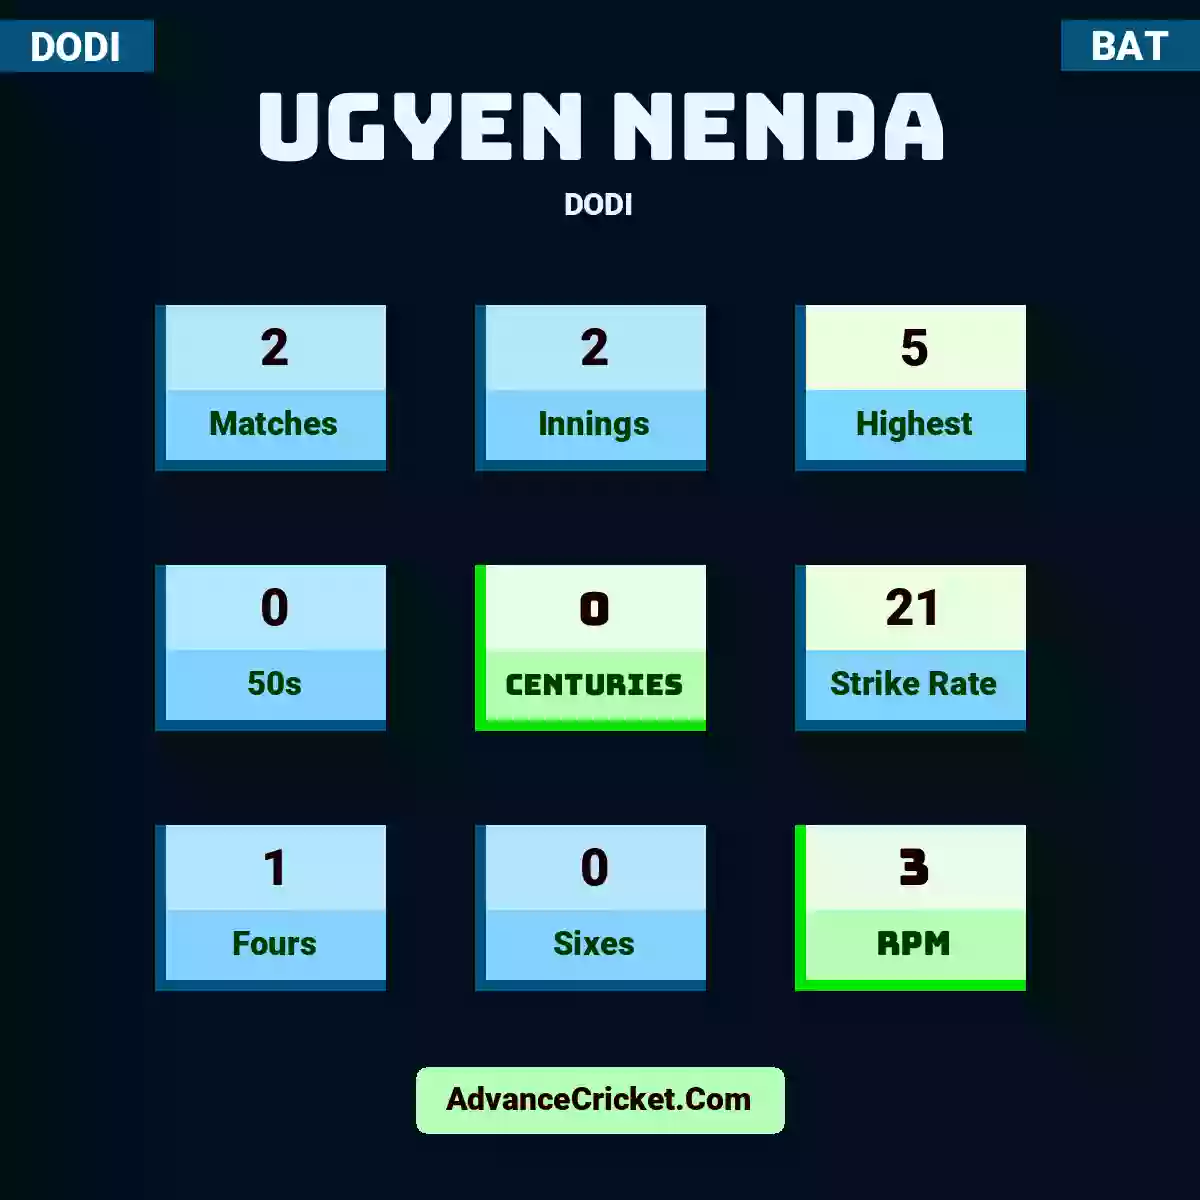 Ugyen Nenda DODI , Ugyen Nenda played 2 matches, scored 5 runs as highest, 0 half-centuries, and 0 centuries, with a strike rate of 21. U.Nenda hit 1 fours and 0 sixes, with an RPM of 3.